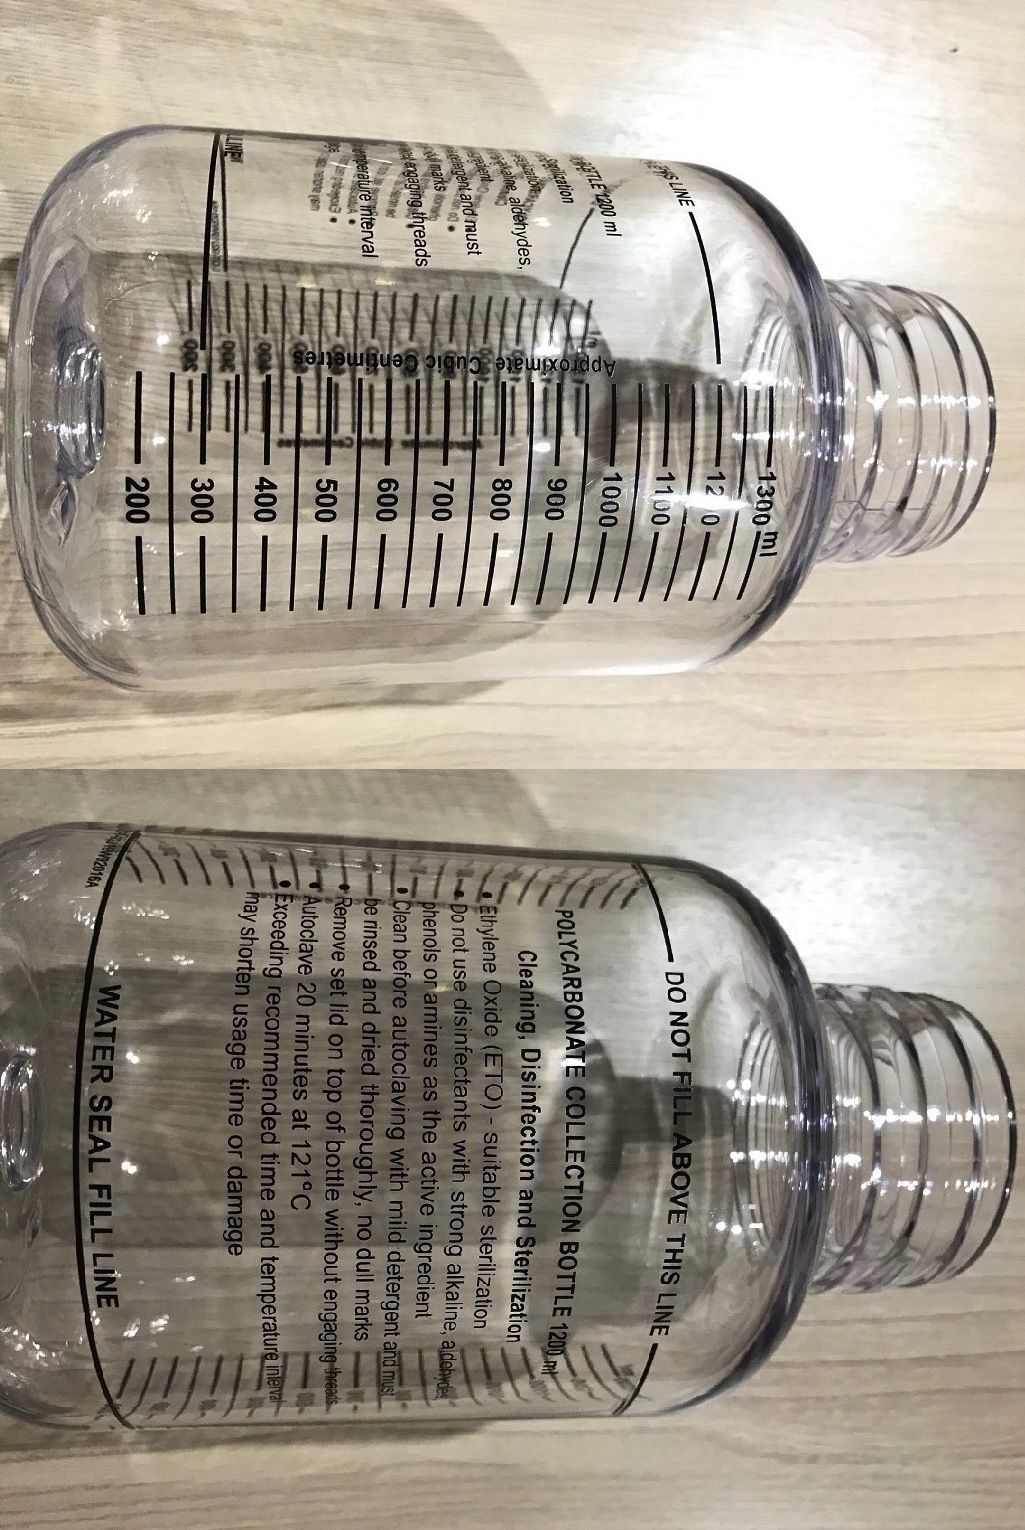 Suction Bottle Suction Container Suction Jar 1.5 L_ขวดดูดเสมหะผู้ป่วยขนาด 1.5 ลิตร ขวดซักชั่น ขนาด 1.5 ลิตร